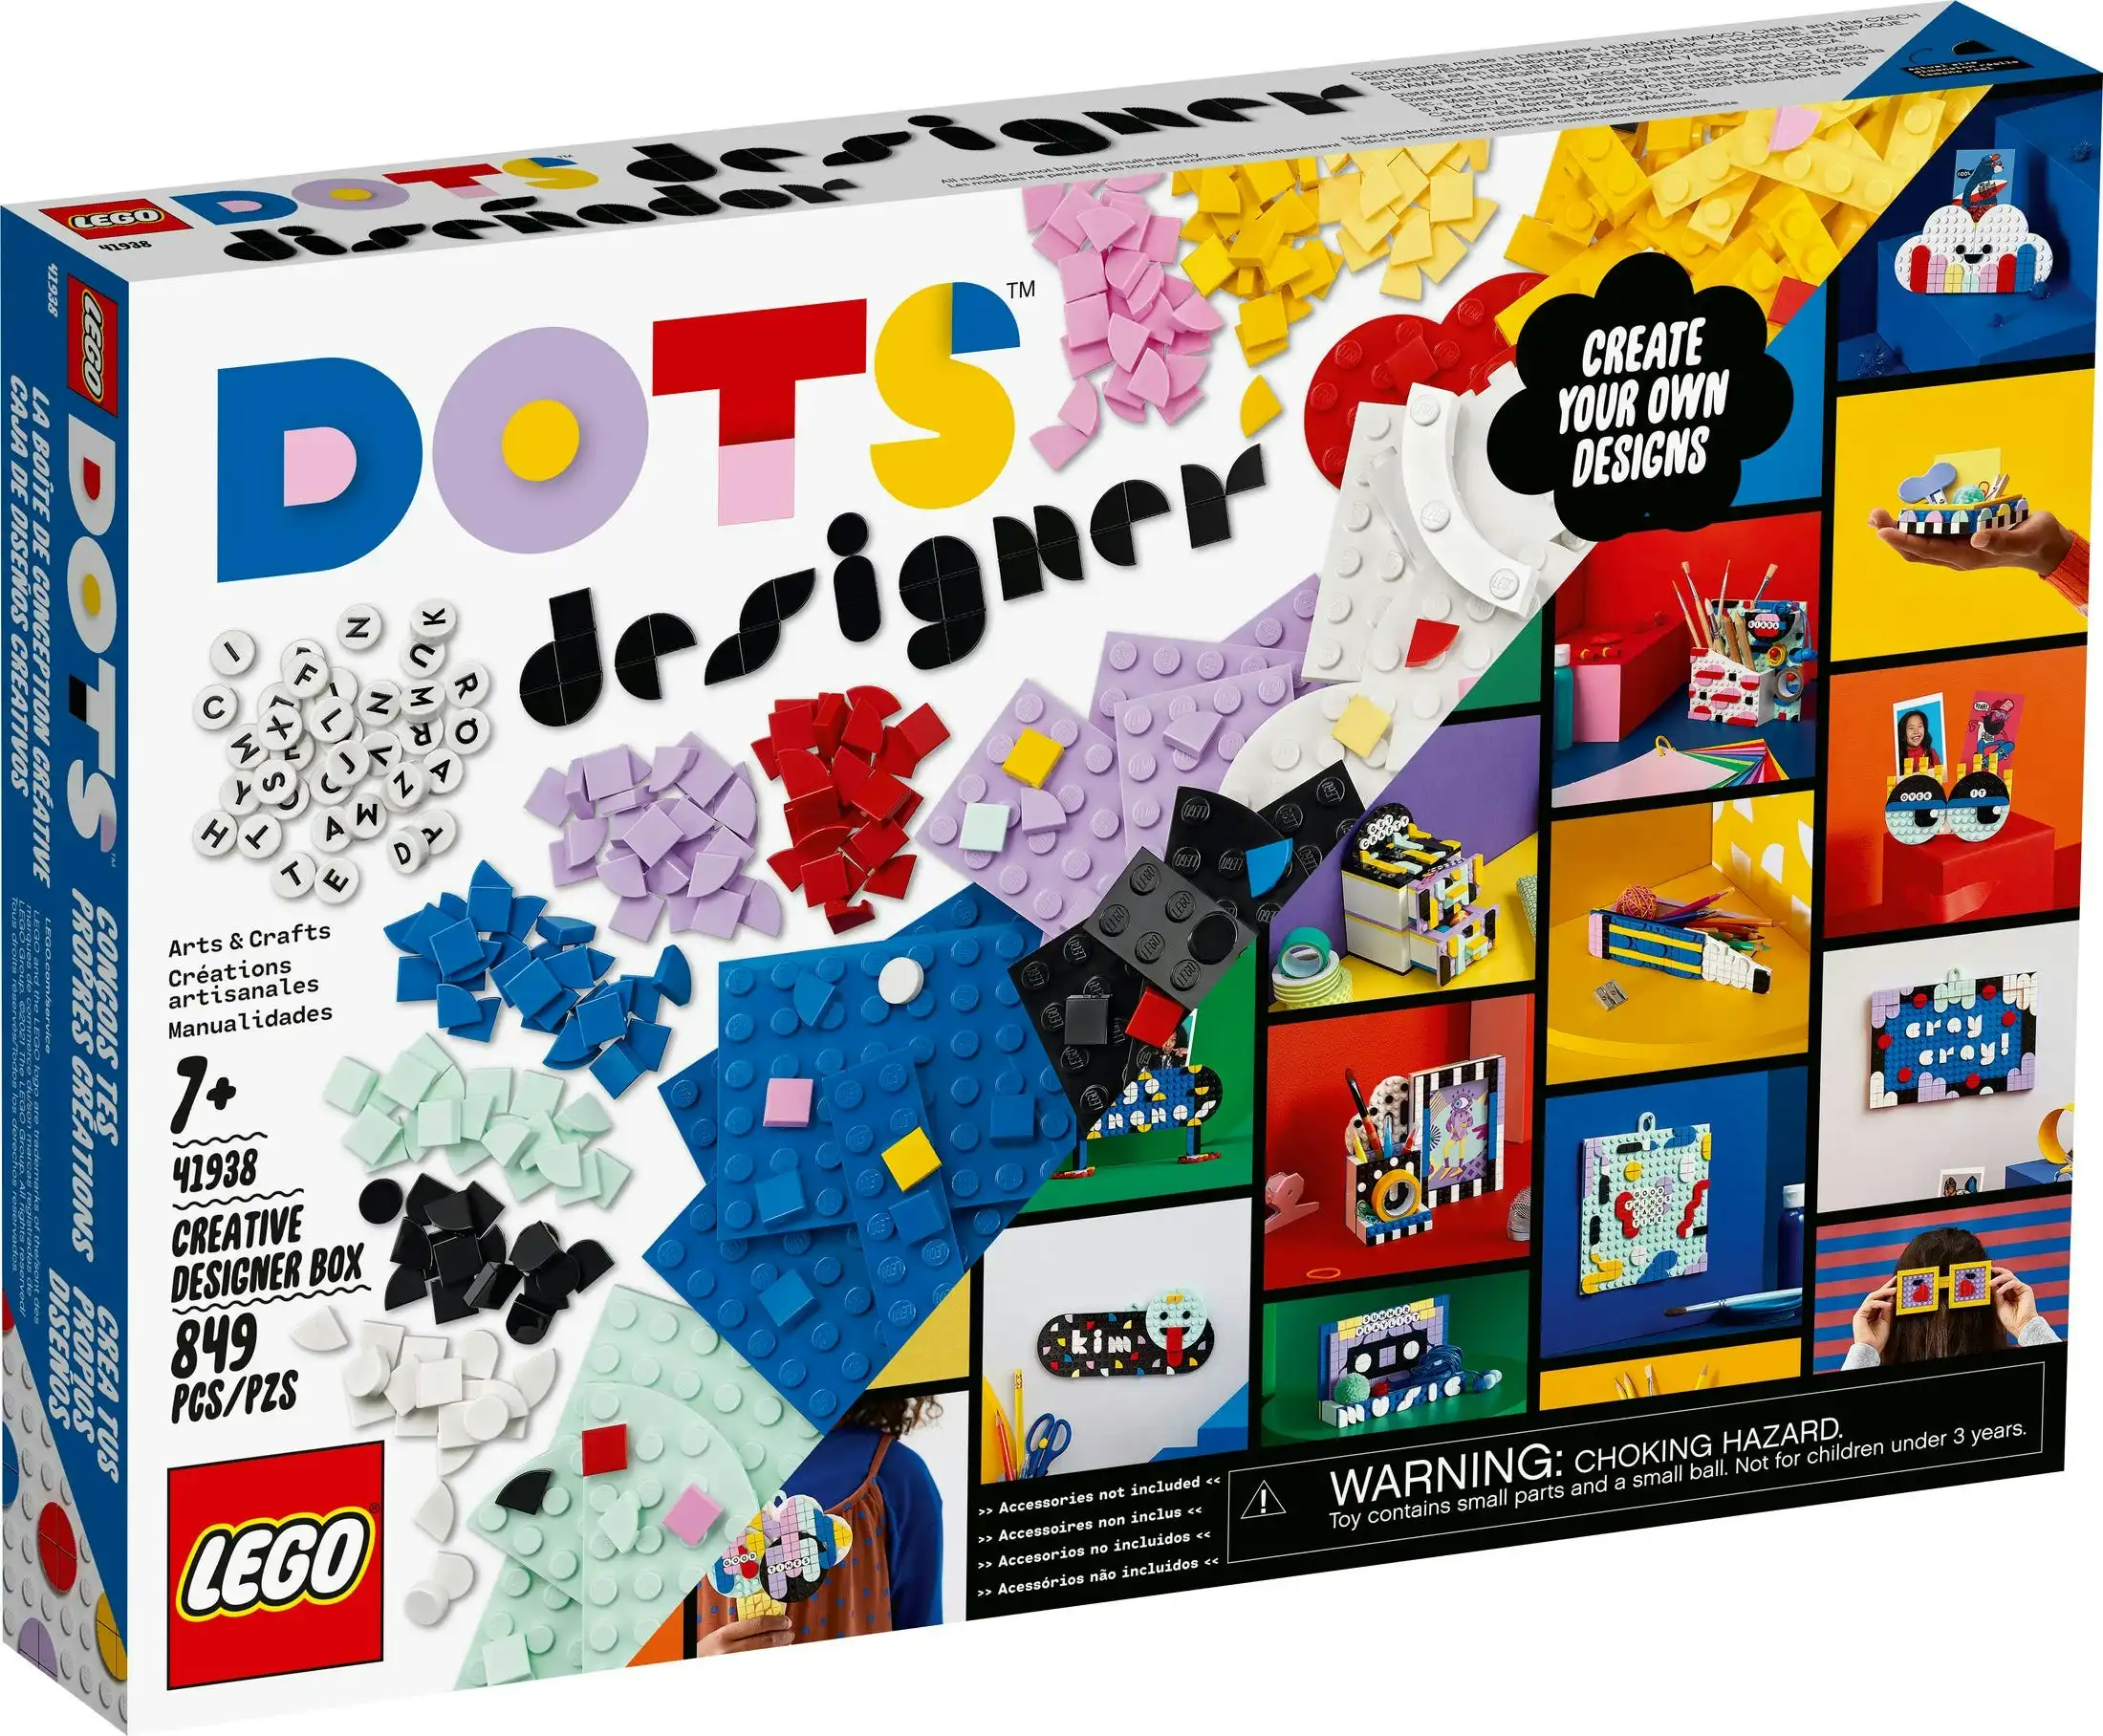 LEGO 41938 Creative Designer Box - Dots